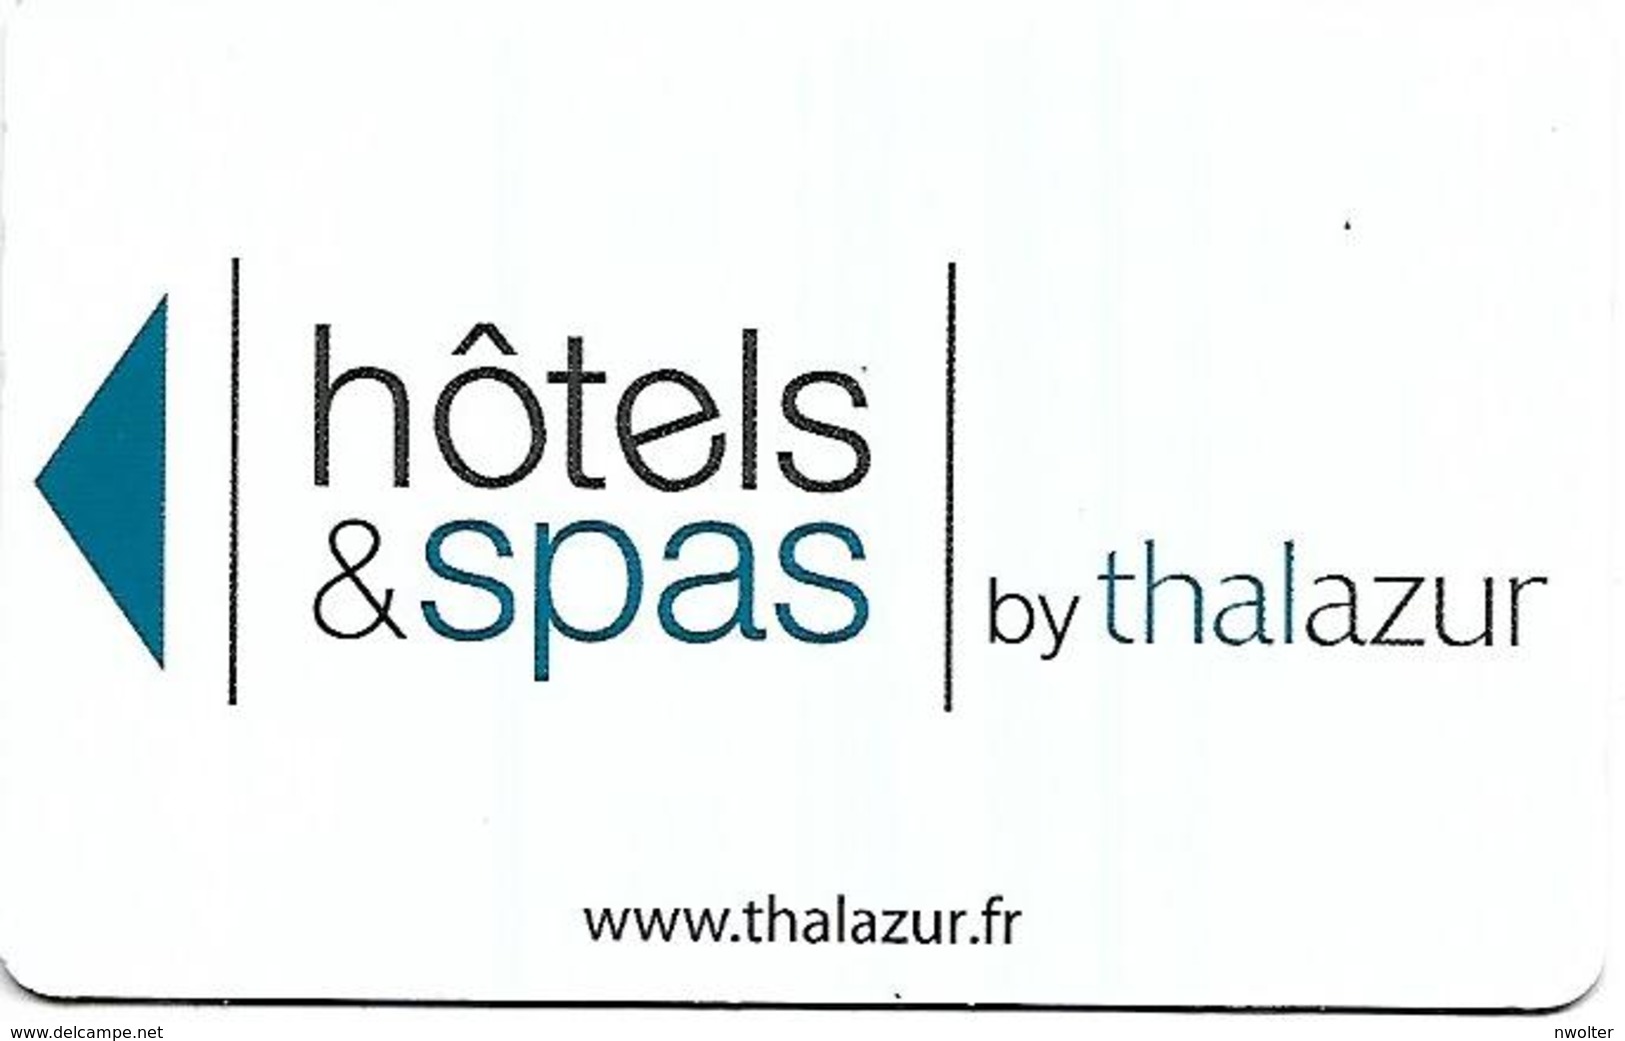 @ + CLEF D'HÔTEL : Thalazur (France) - Hotel Key Cards